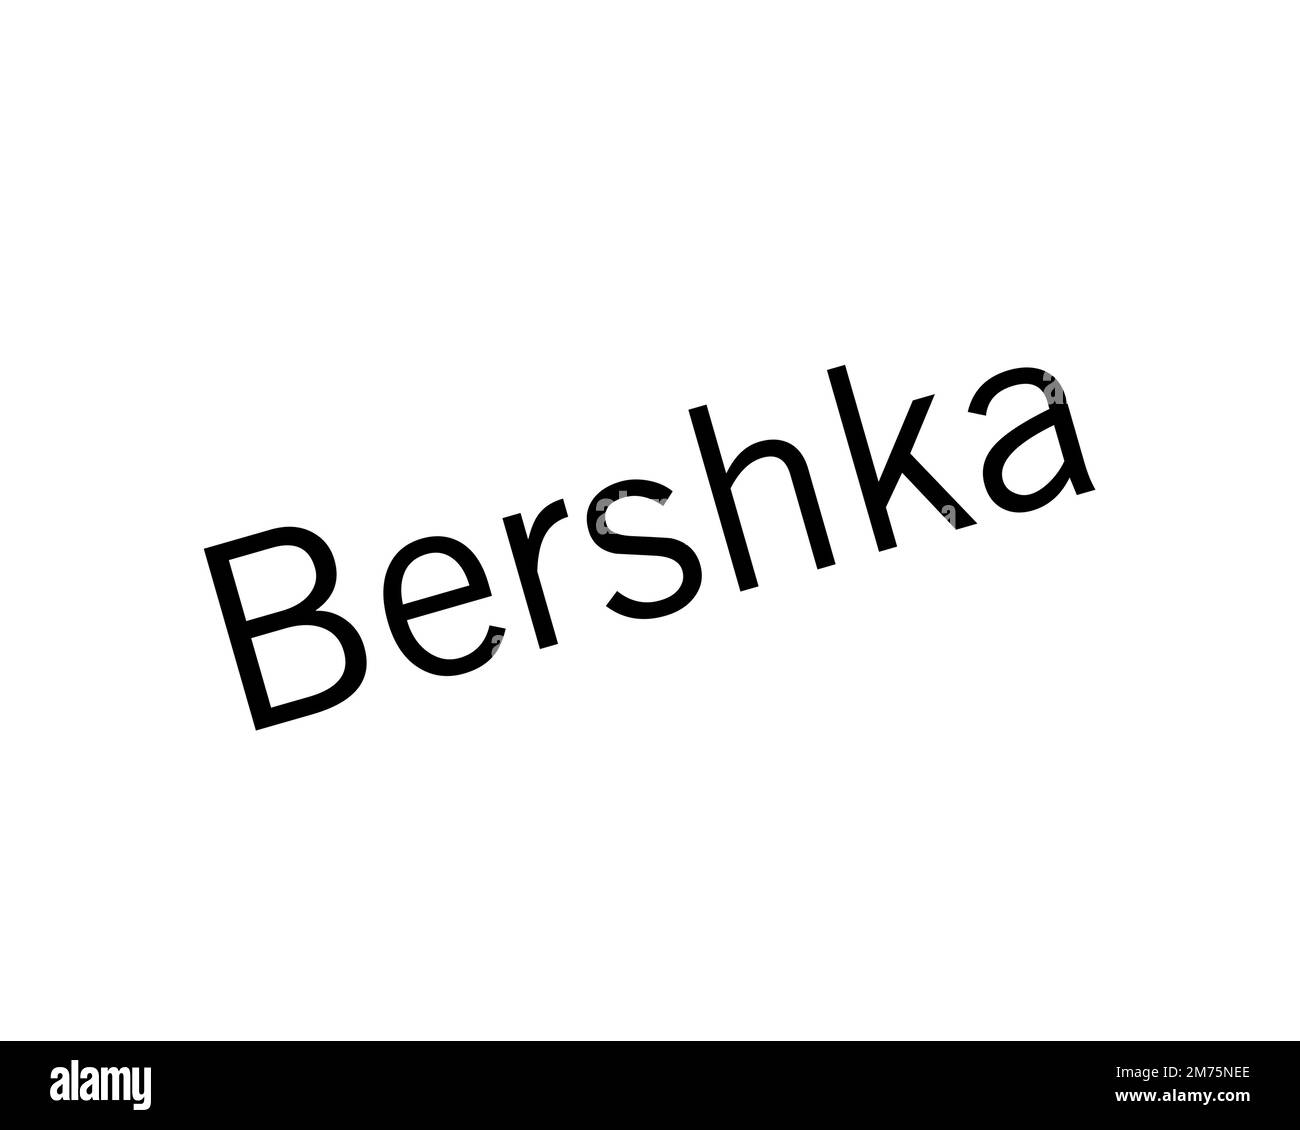 Bershka logo Black and White Stock Photos & Images - Alamy